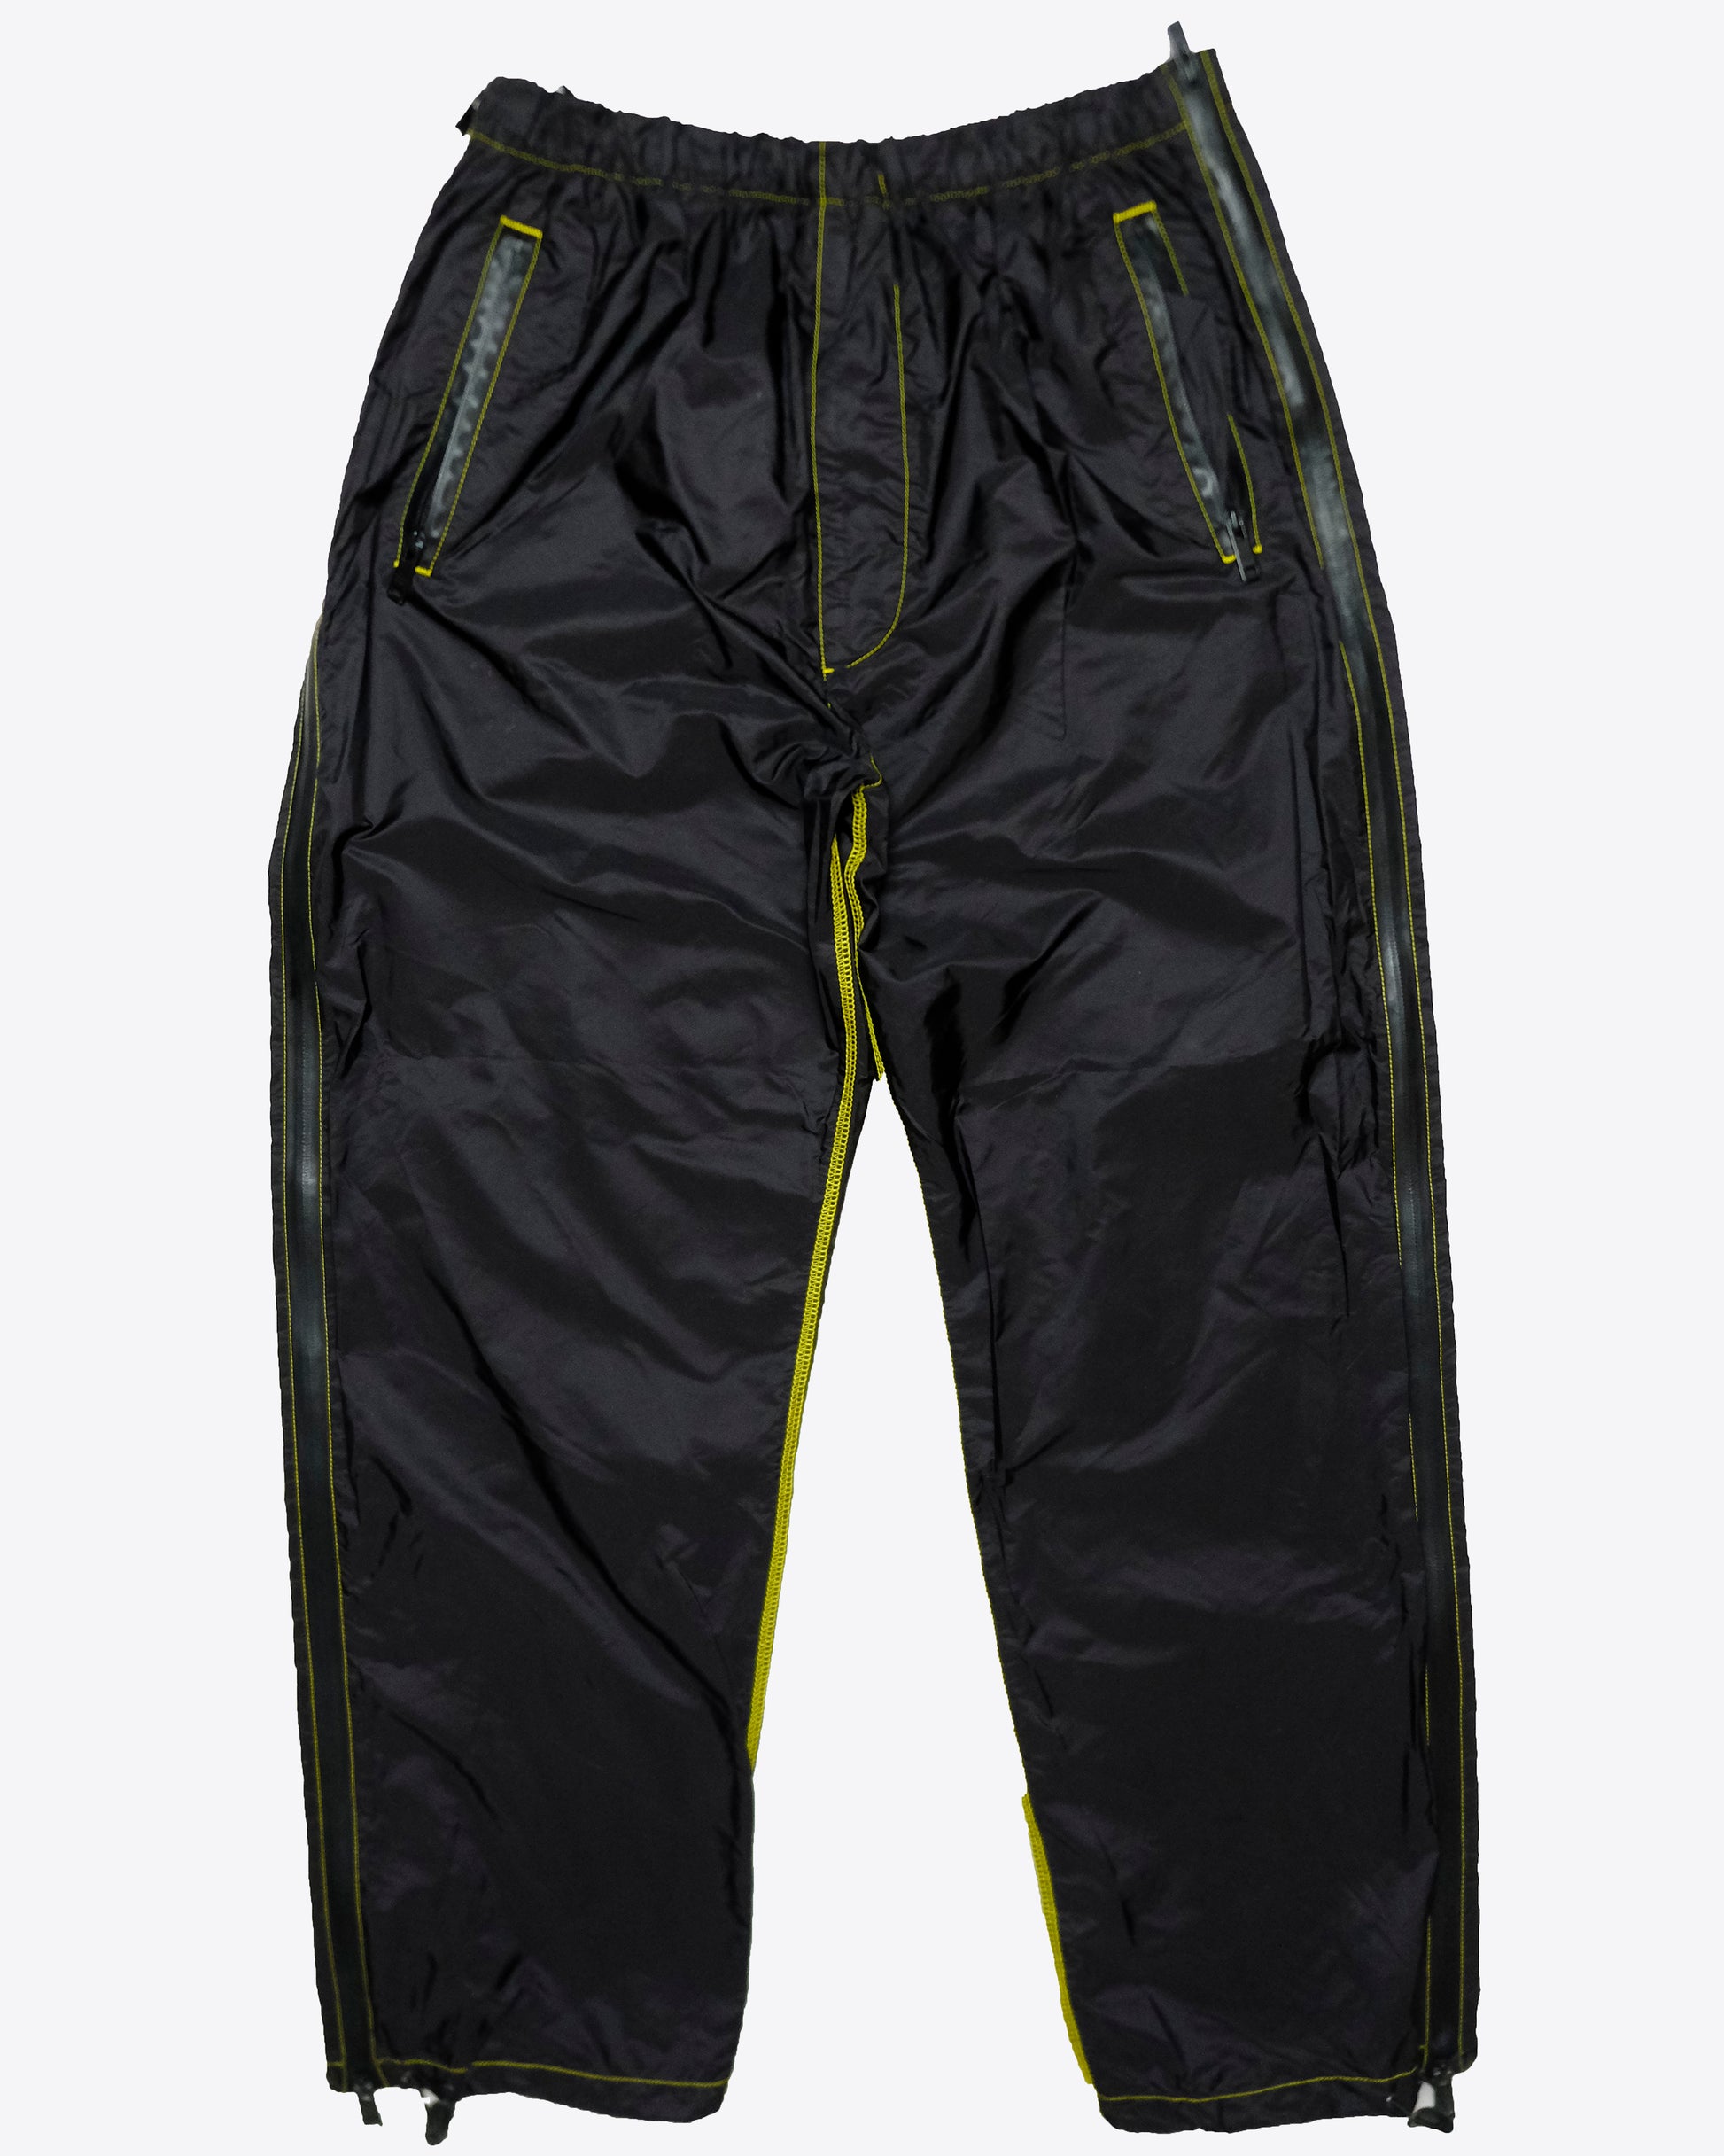 Prada - SS17 Runway Nylon Tech Track Pants with Yellow Overlock Stitching,  Size L